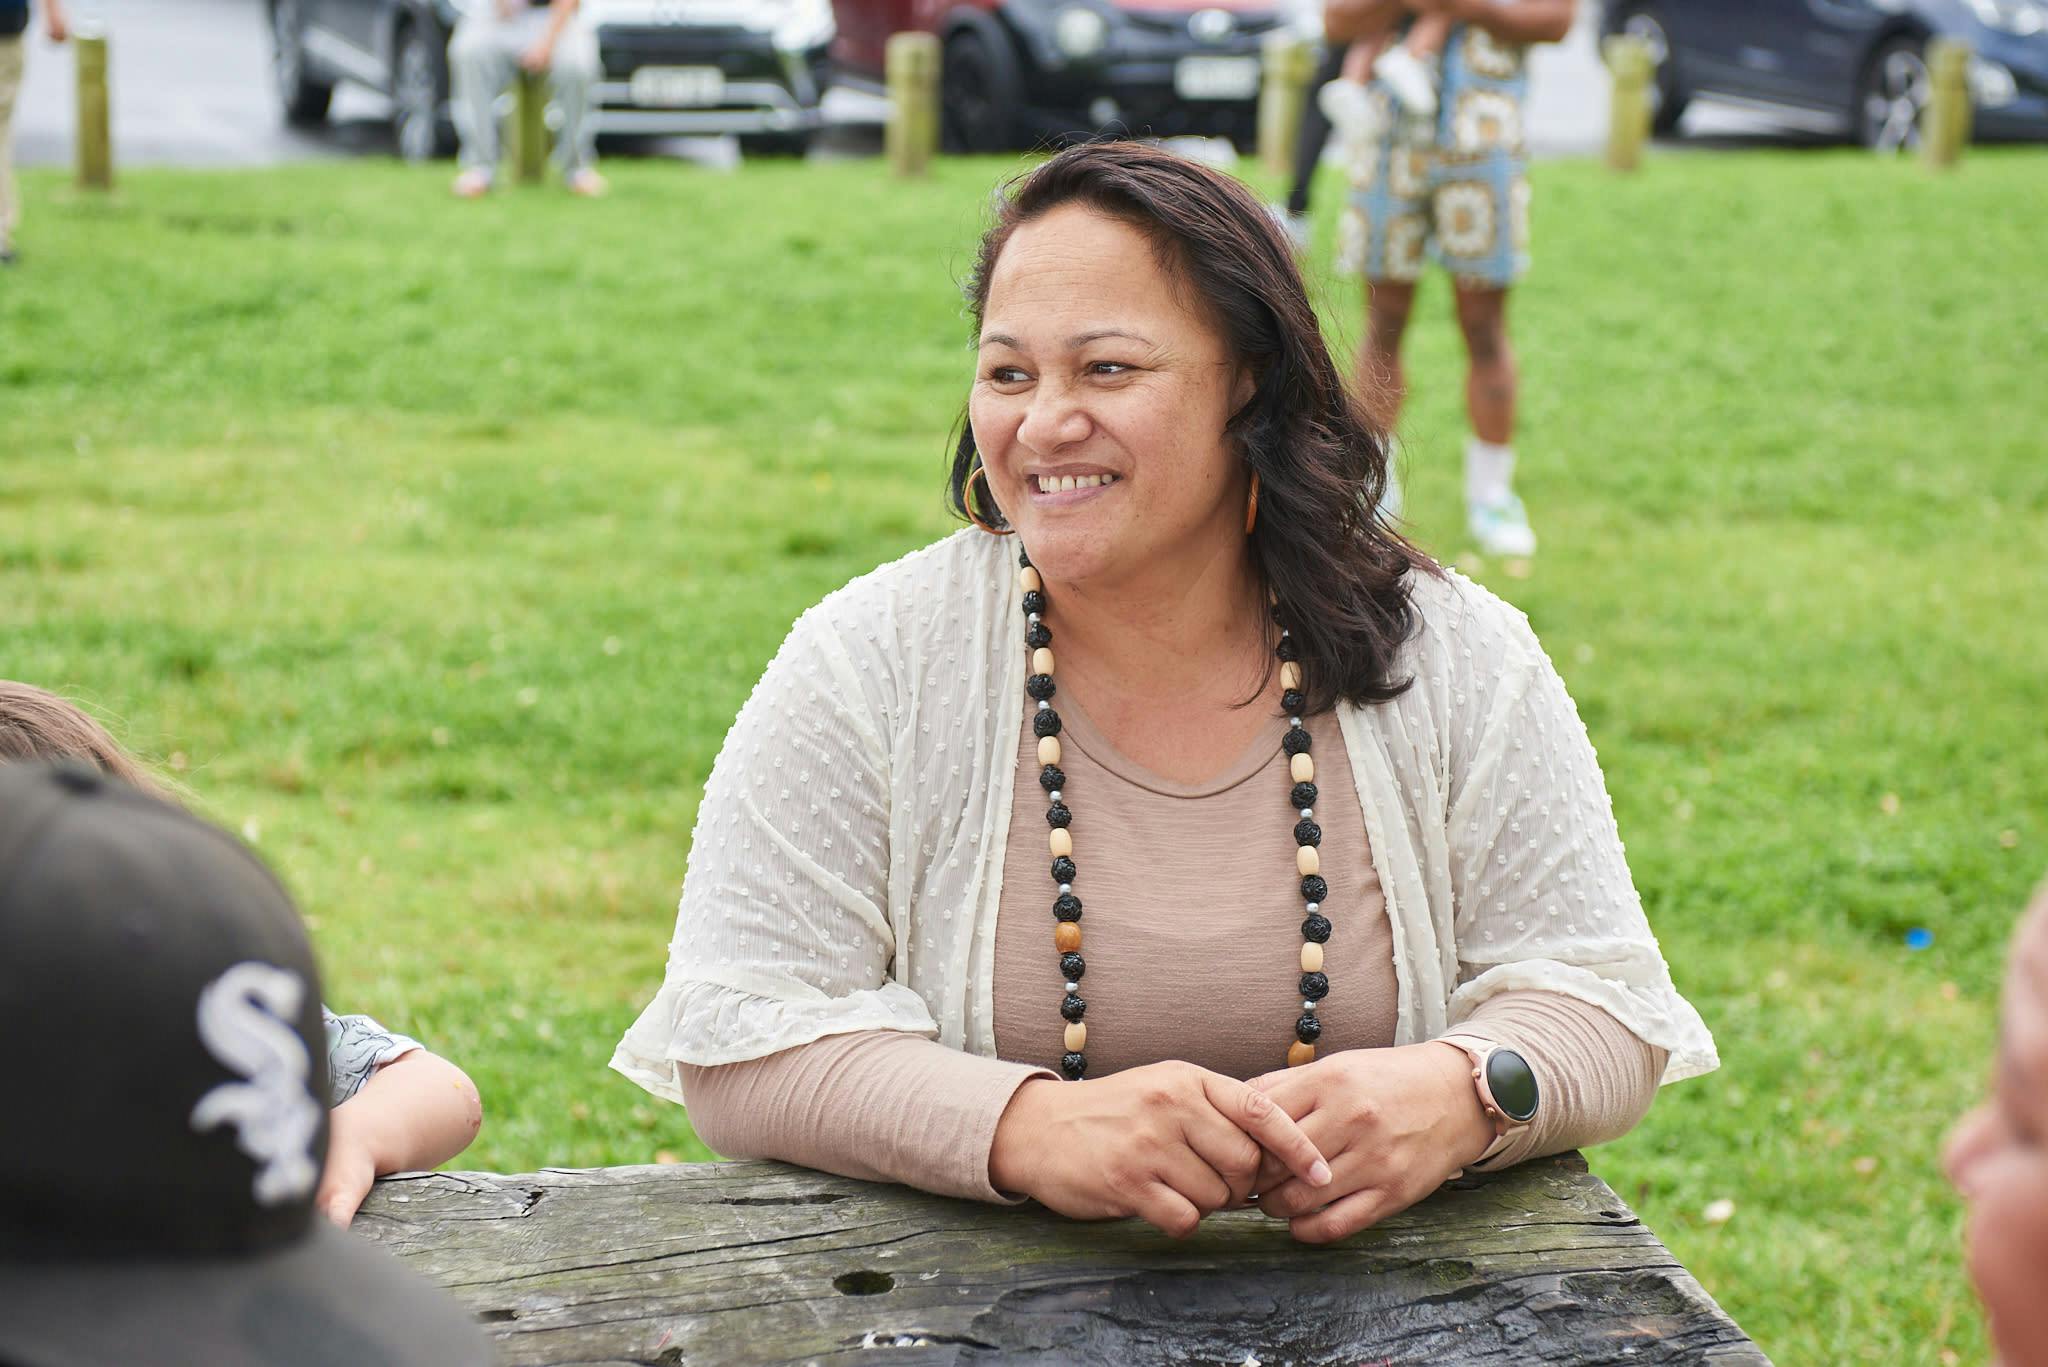 Māori woman sitting at picnic bench